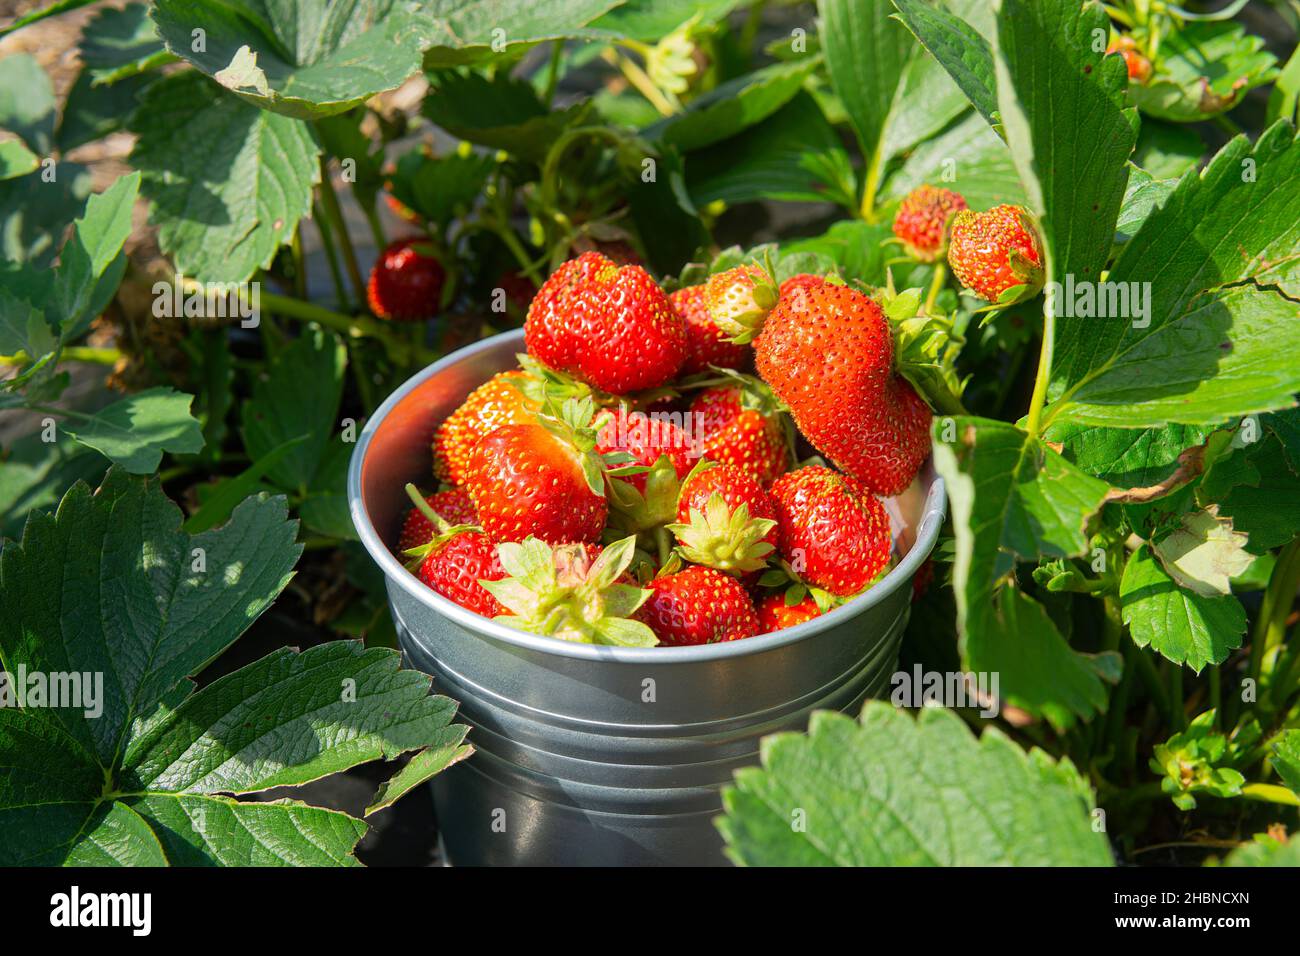 Tin bucket full of ripe freshly picked strawberries among juicy green leaves. Stock Photo